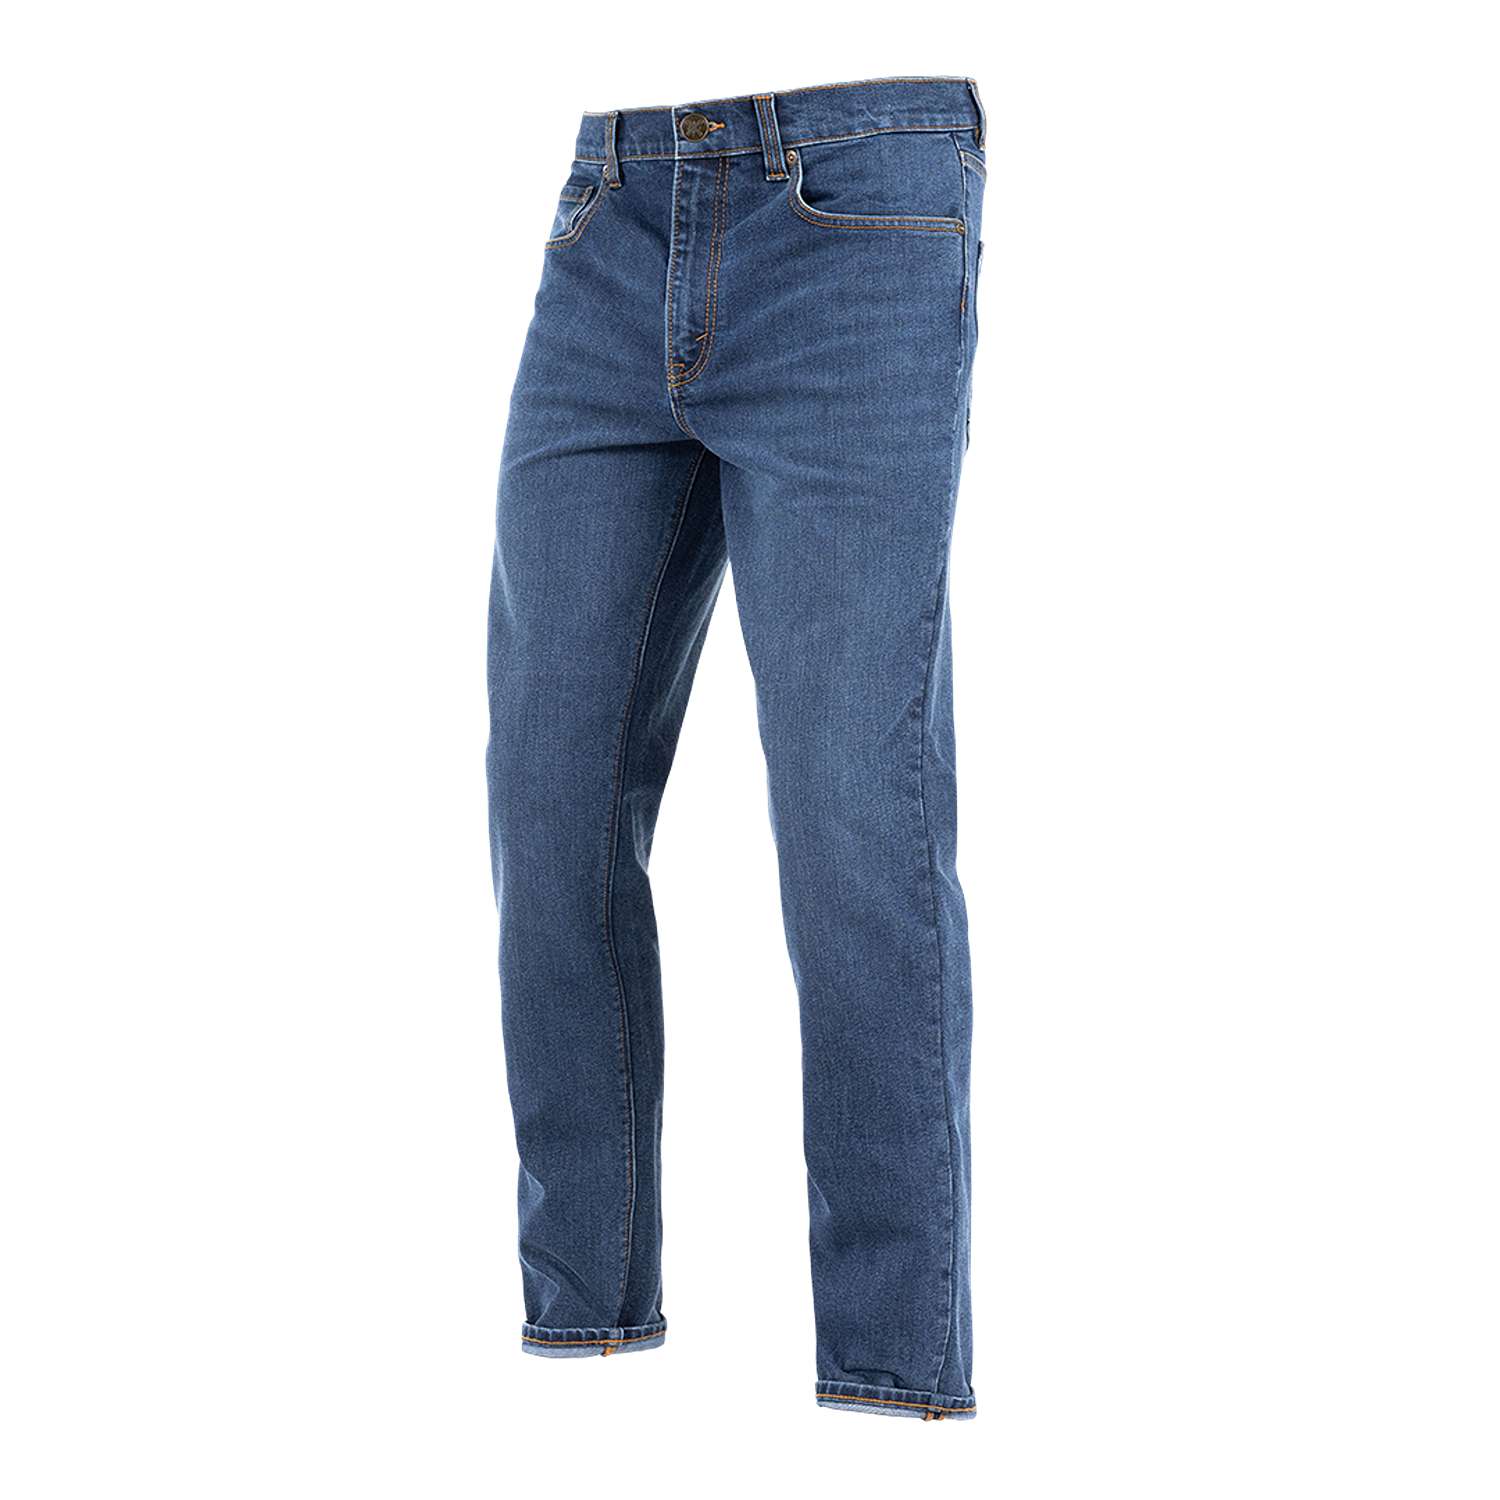 Image of John Doe Classic Tapered Jeans Indigo Size W32/L34 EN